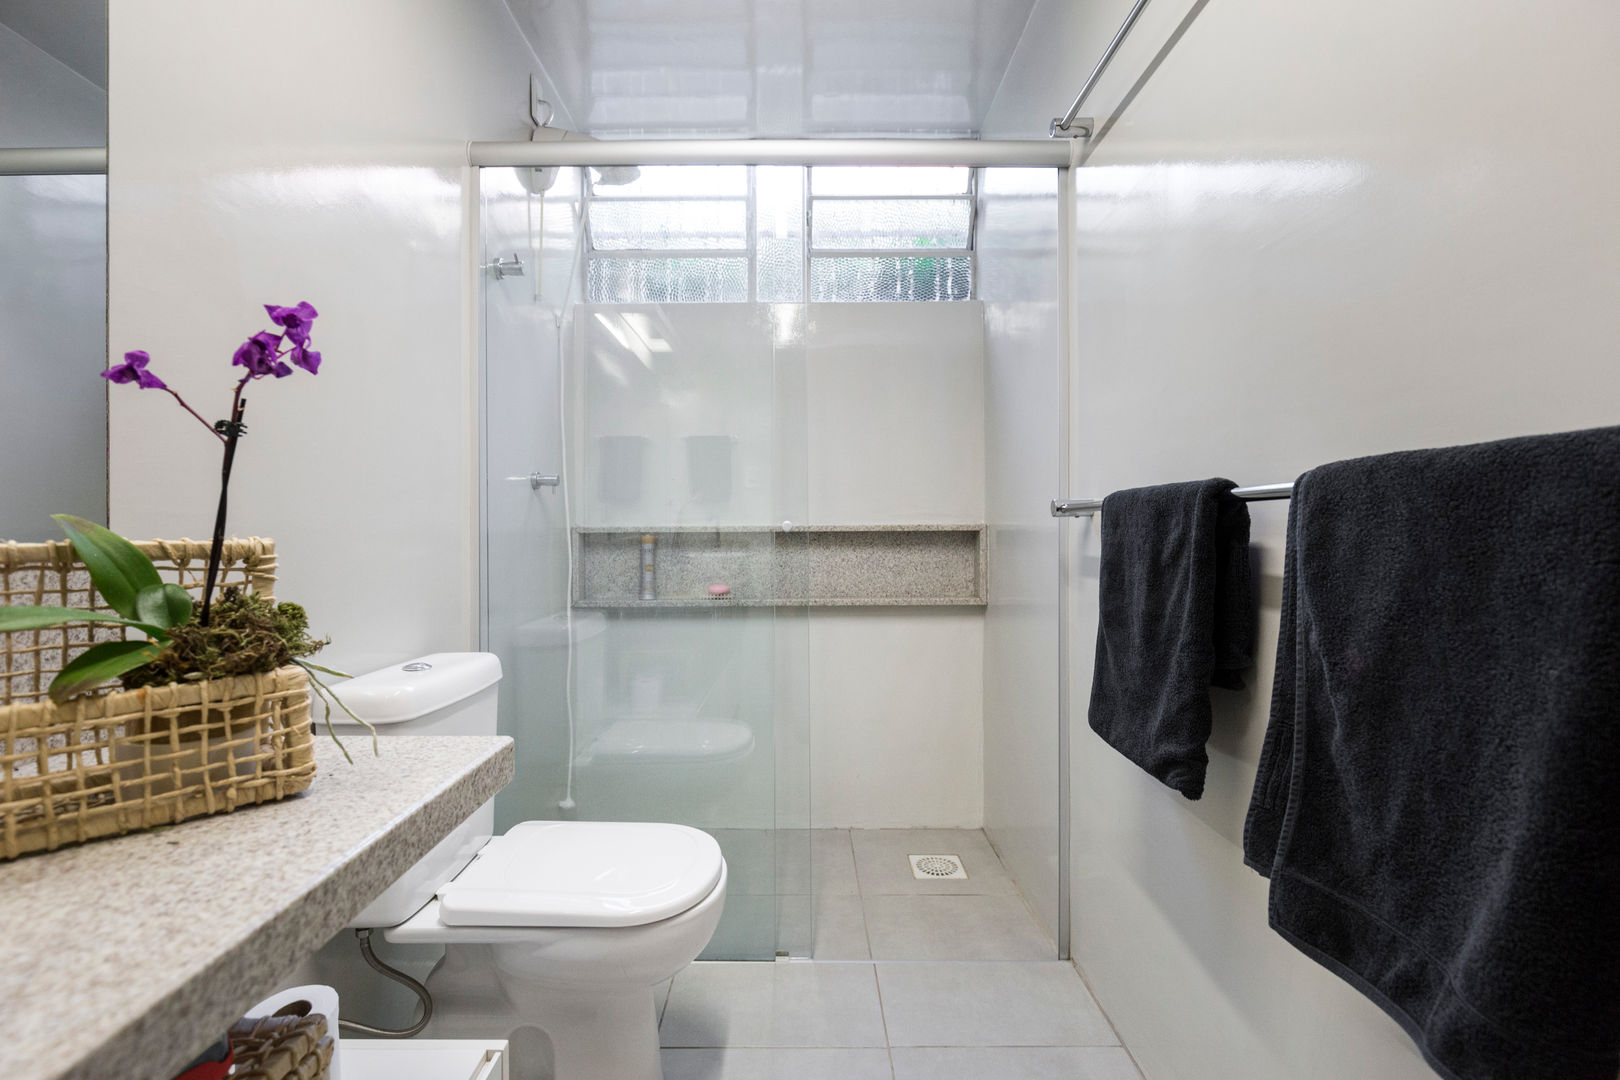 SDP02 | Banho, Kali Arquitetura Kali Arquitetura Modern style bathrooms